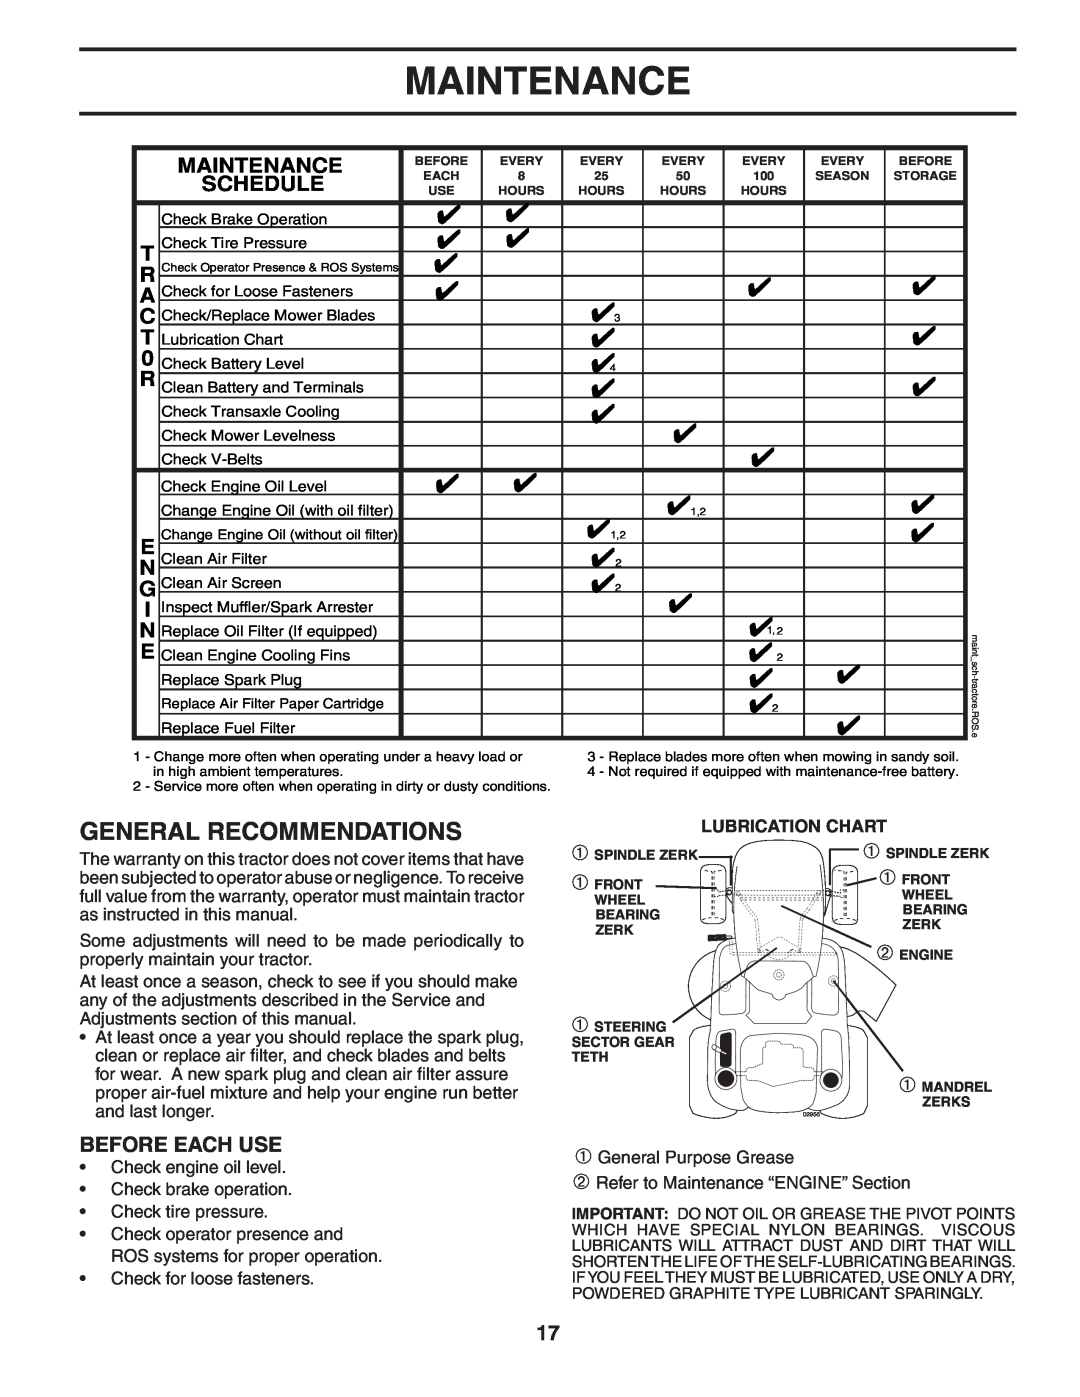 Poulan 405035 manual Maintenance, Lubrication Chart, ➀ SPINDLE ZERK ➀ FRONT WHEEL BEARING ZERK ➀ STEERING SECTOR GEAR TETH 